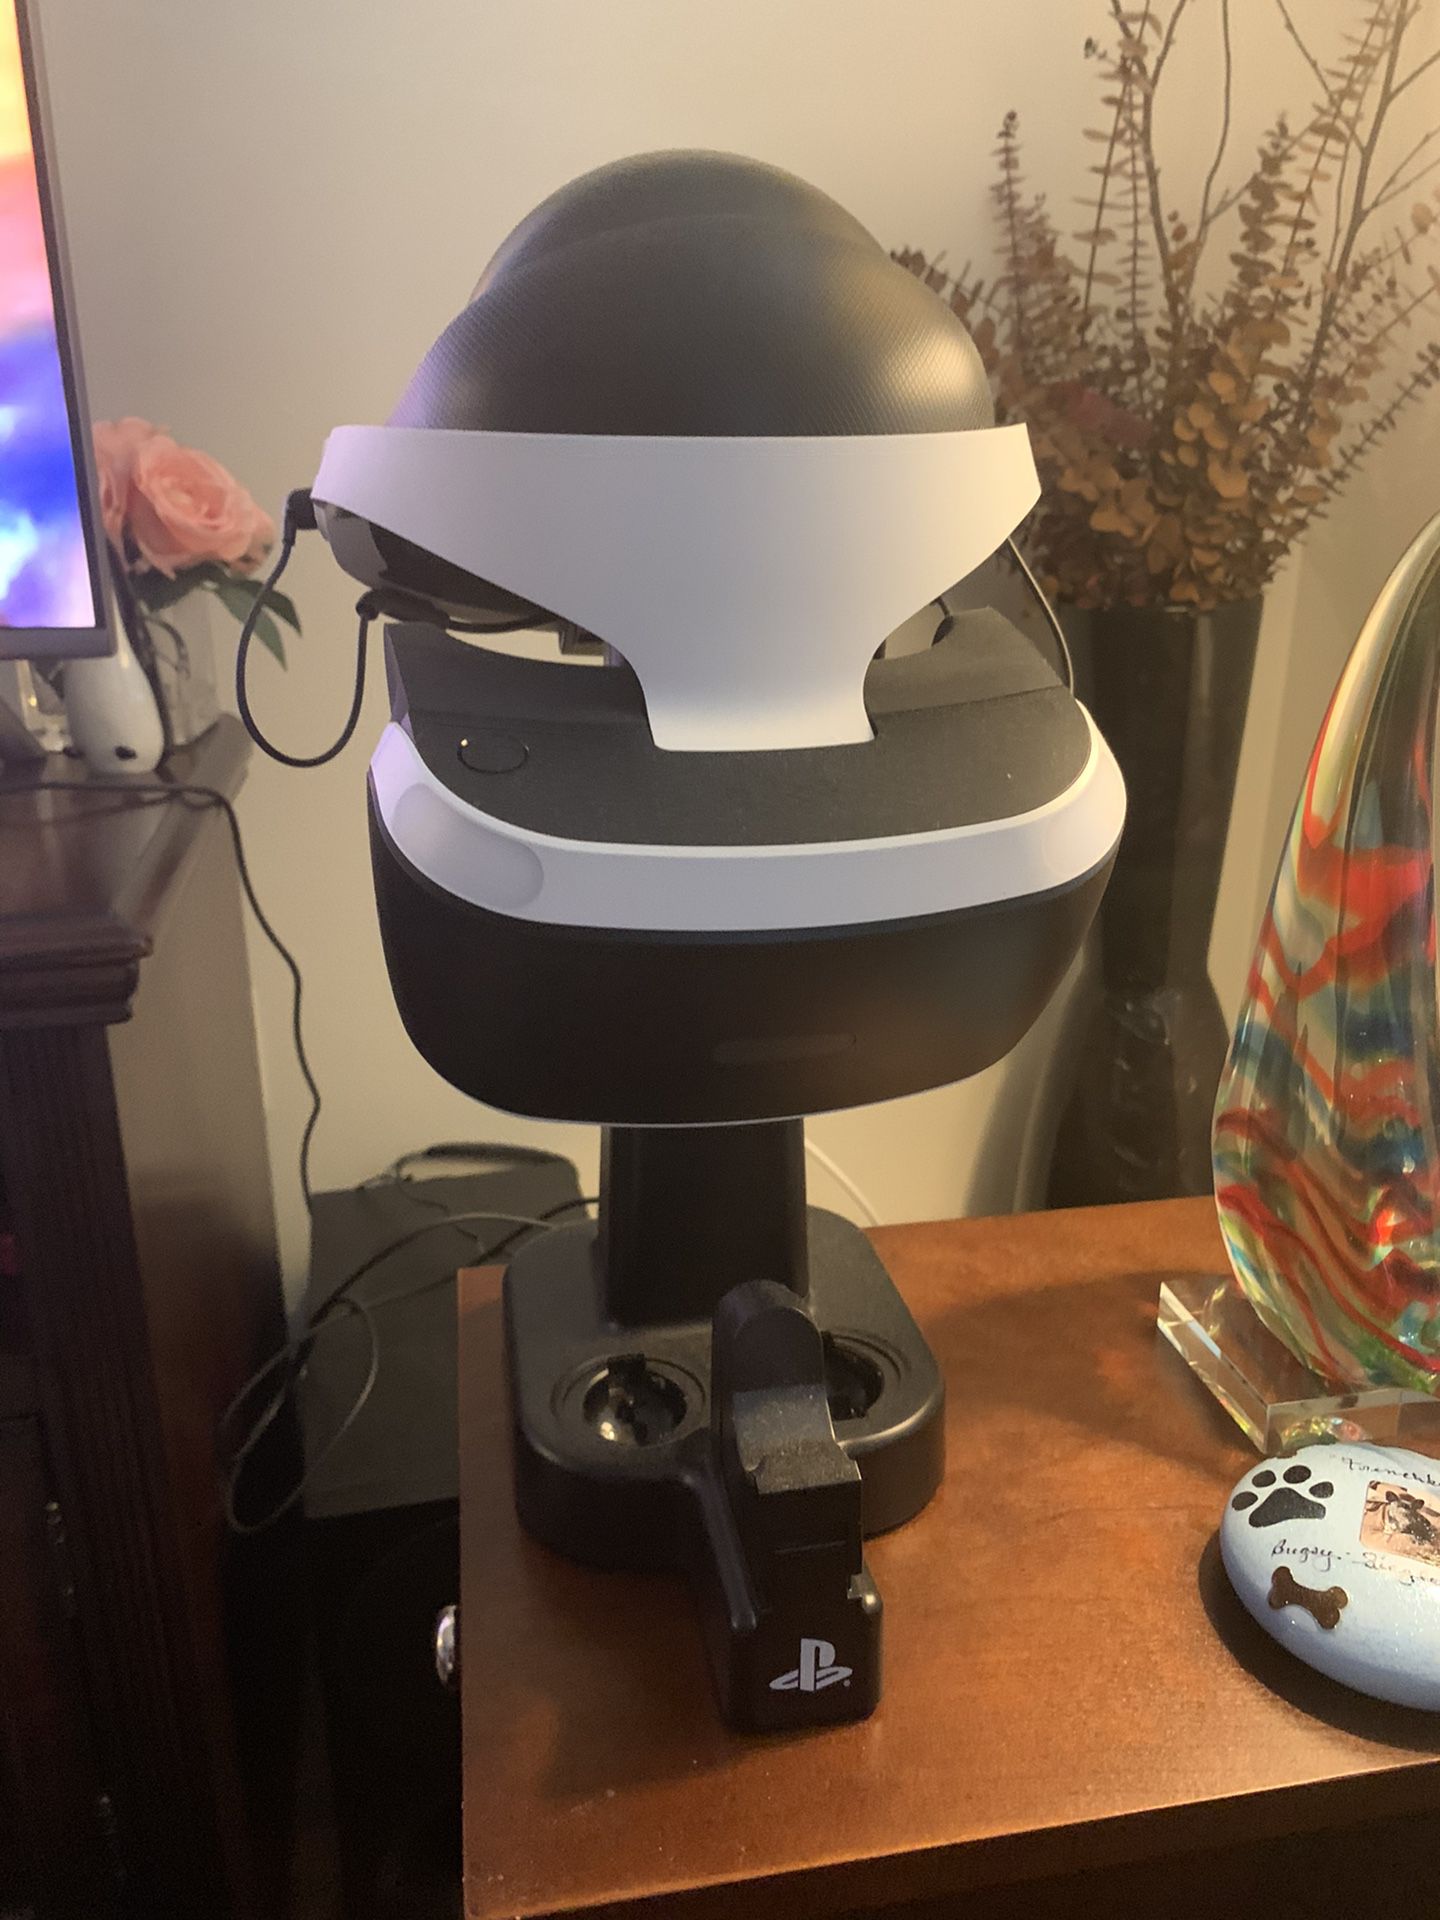 PS4 VR System charging station case games